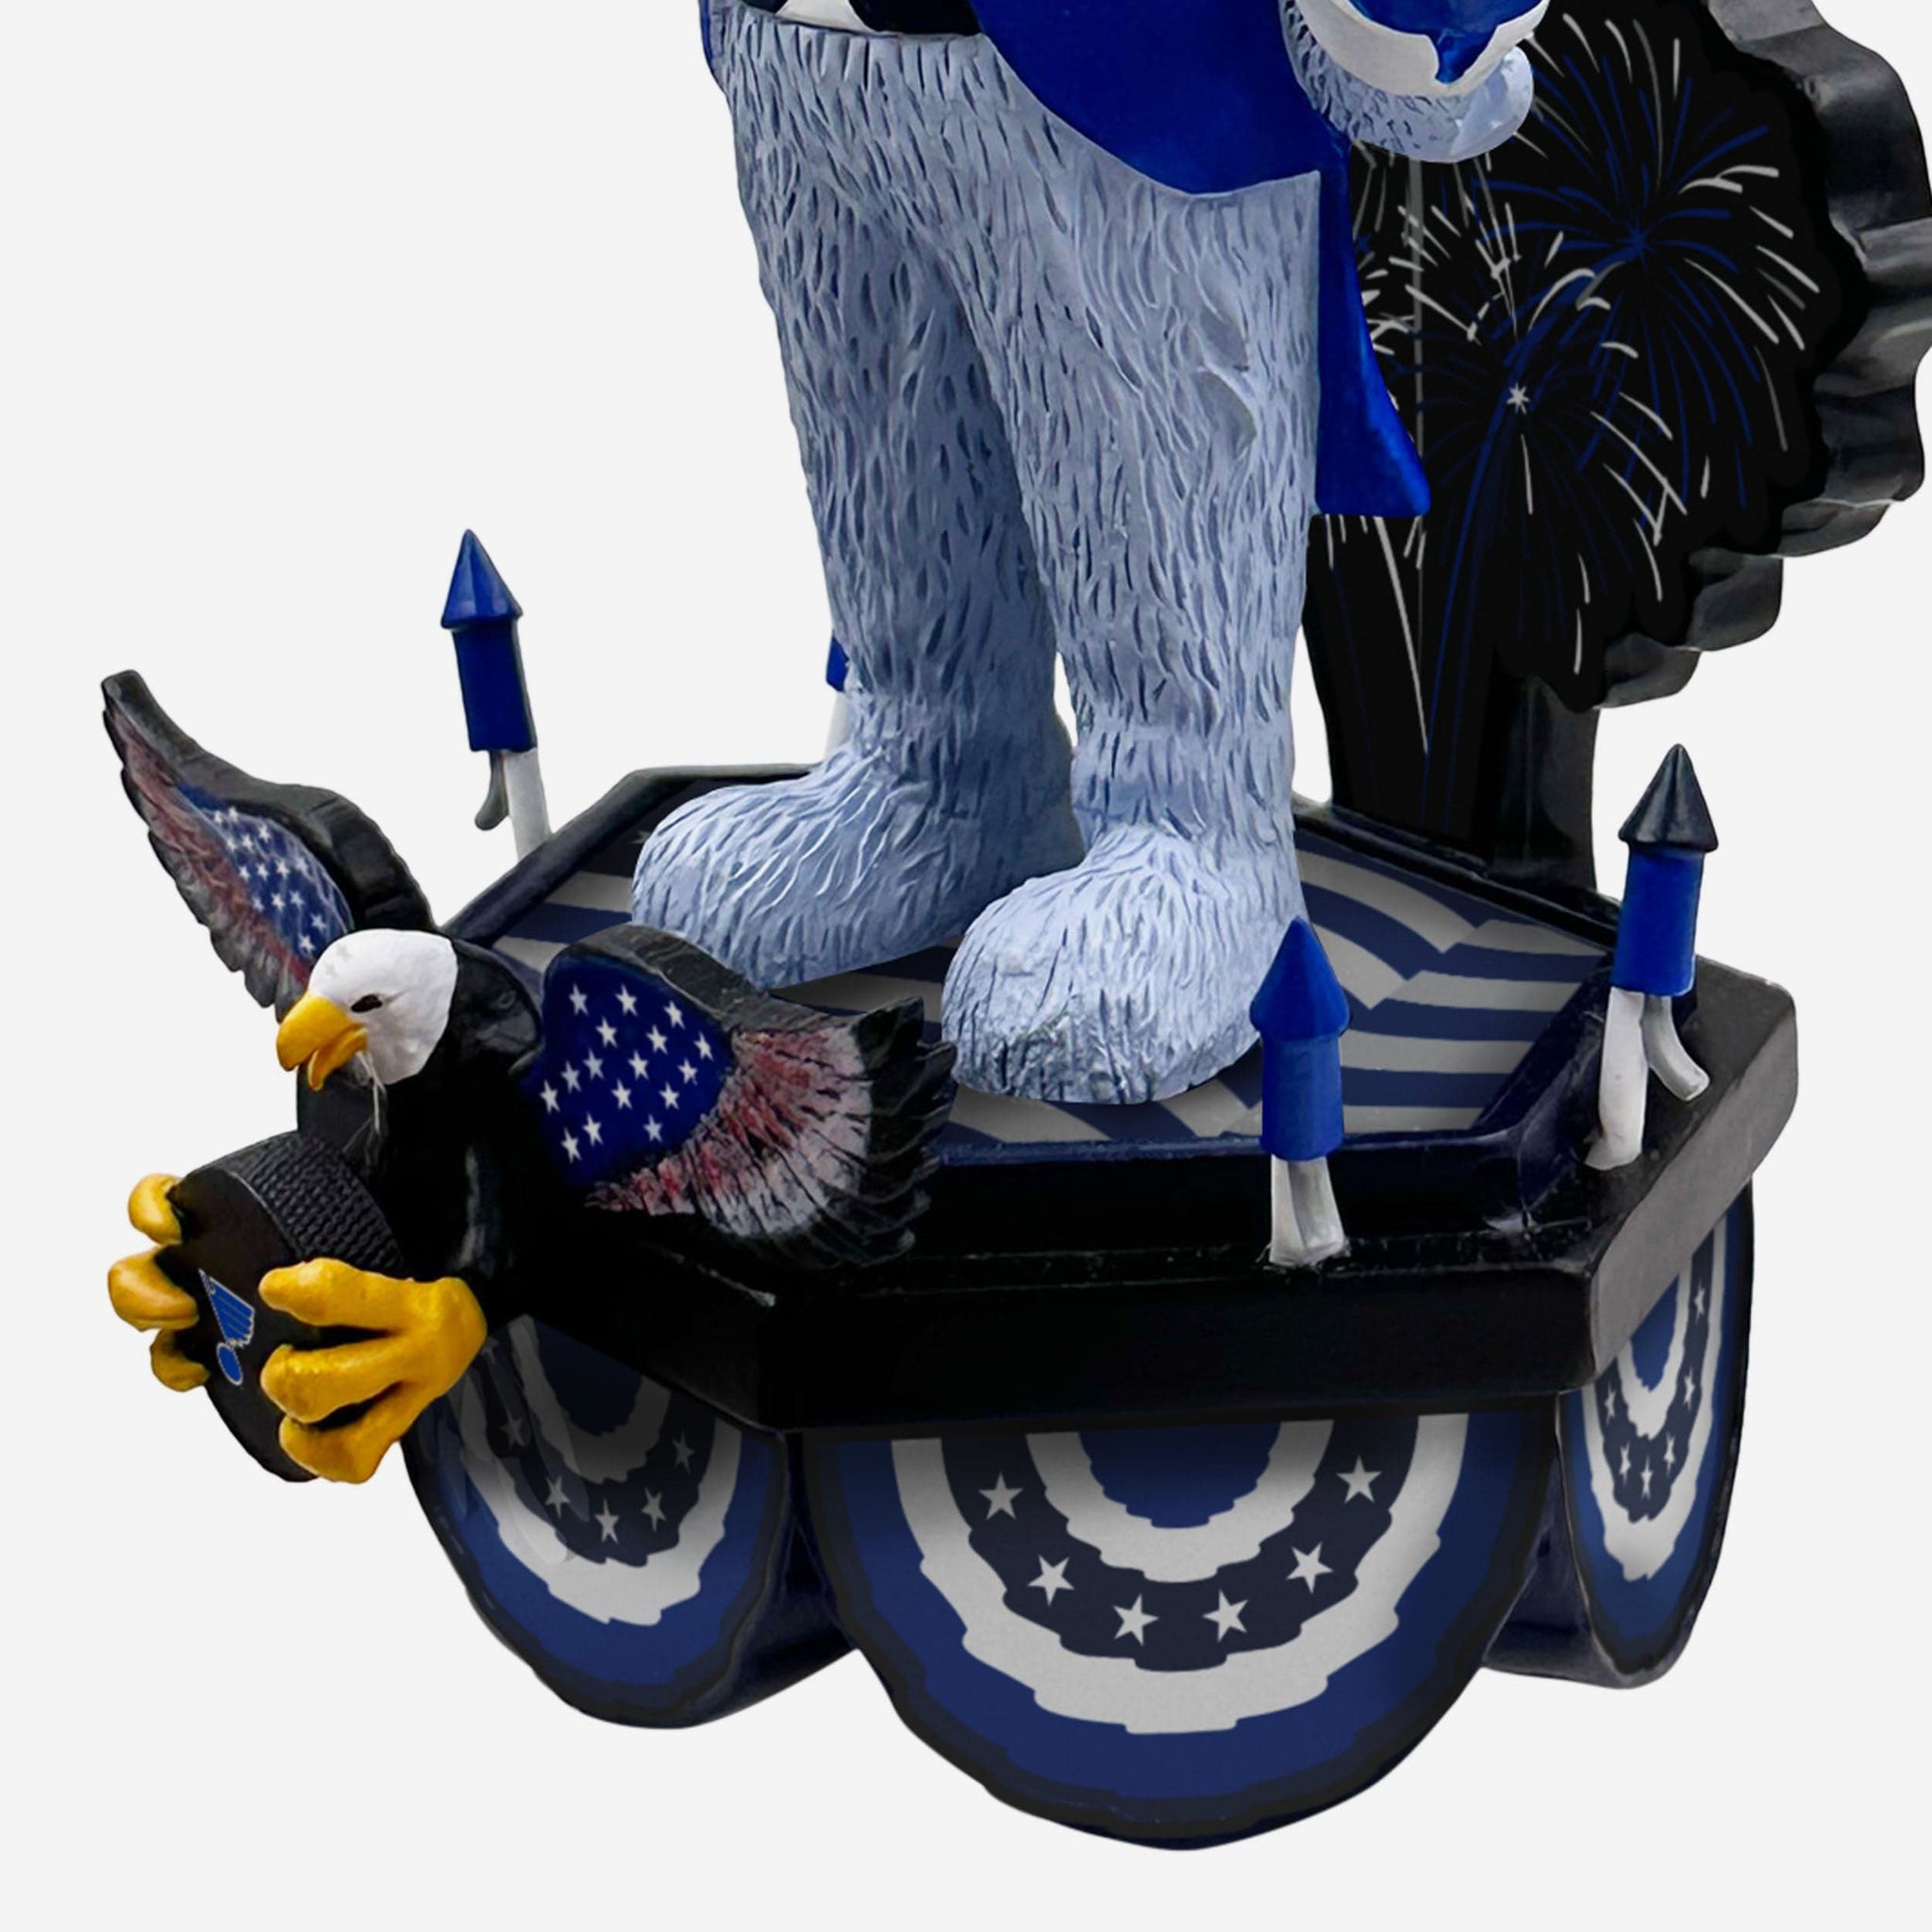 St. Louis Blues Louie Mascot Bobblehead - Collectible Bobbleheads